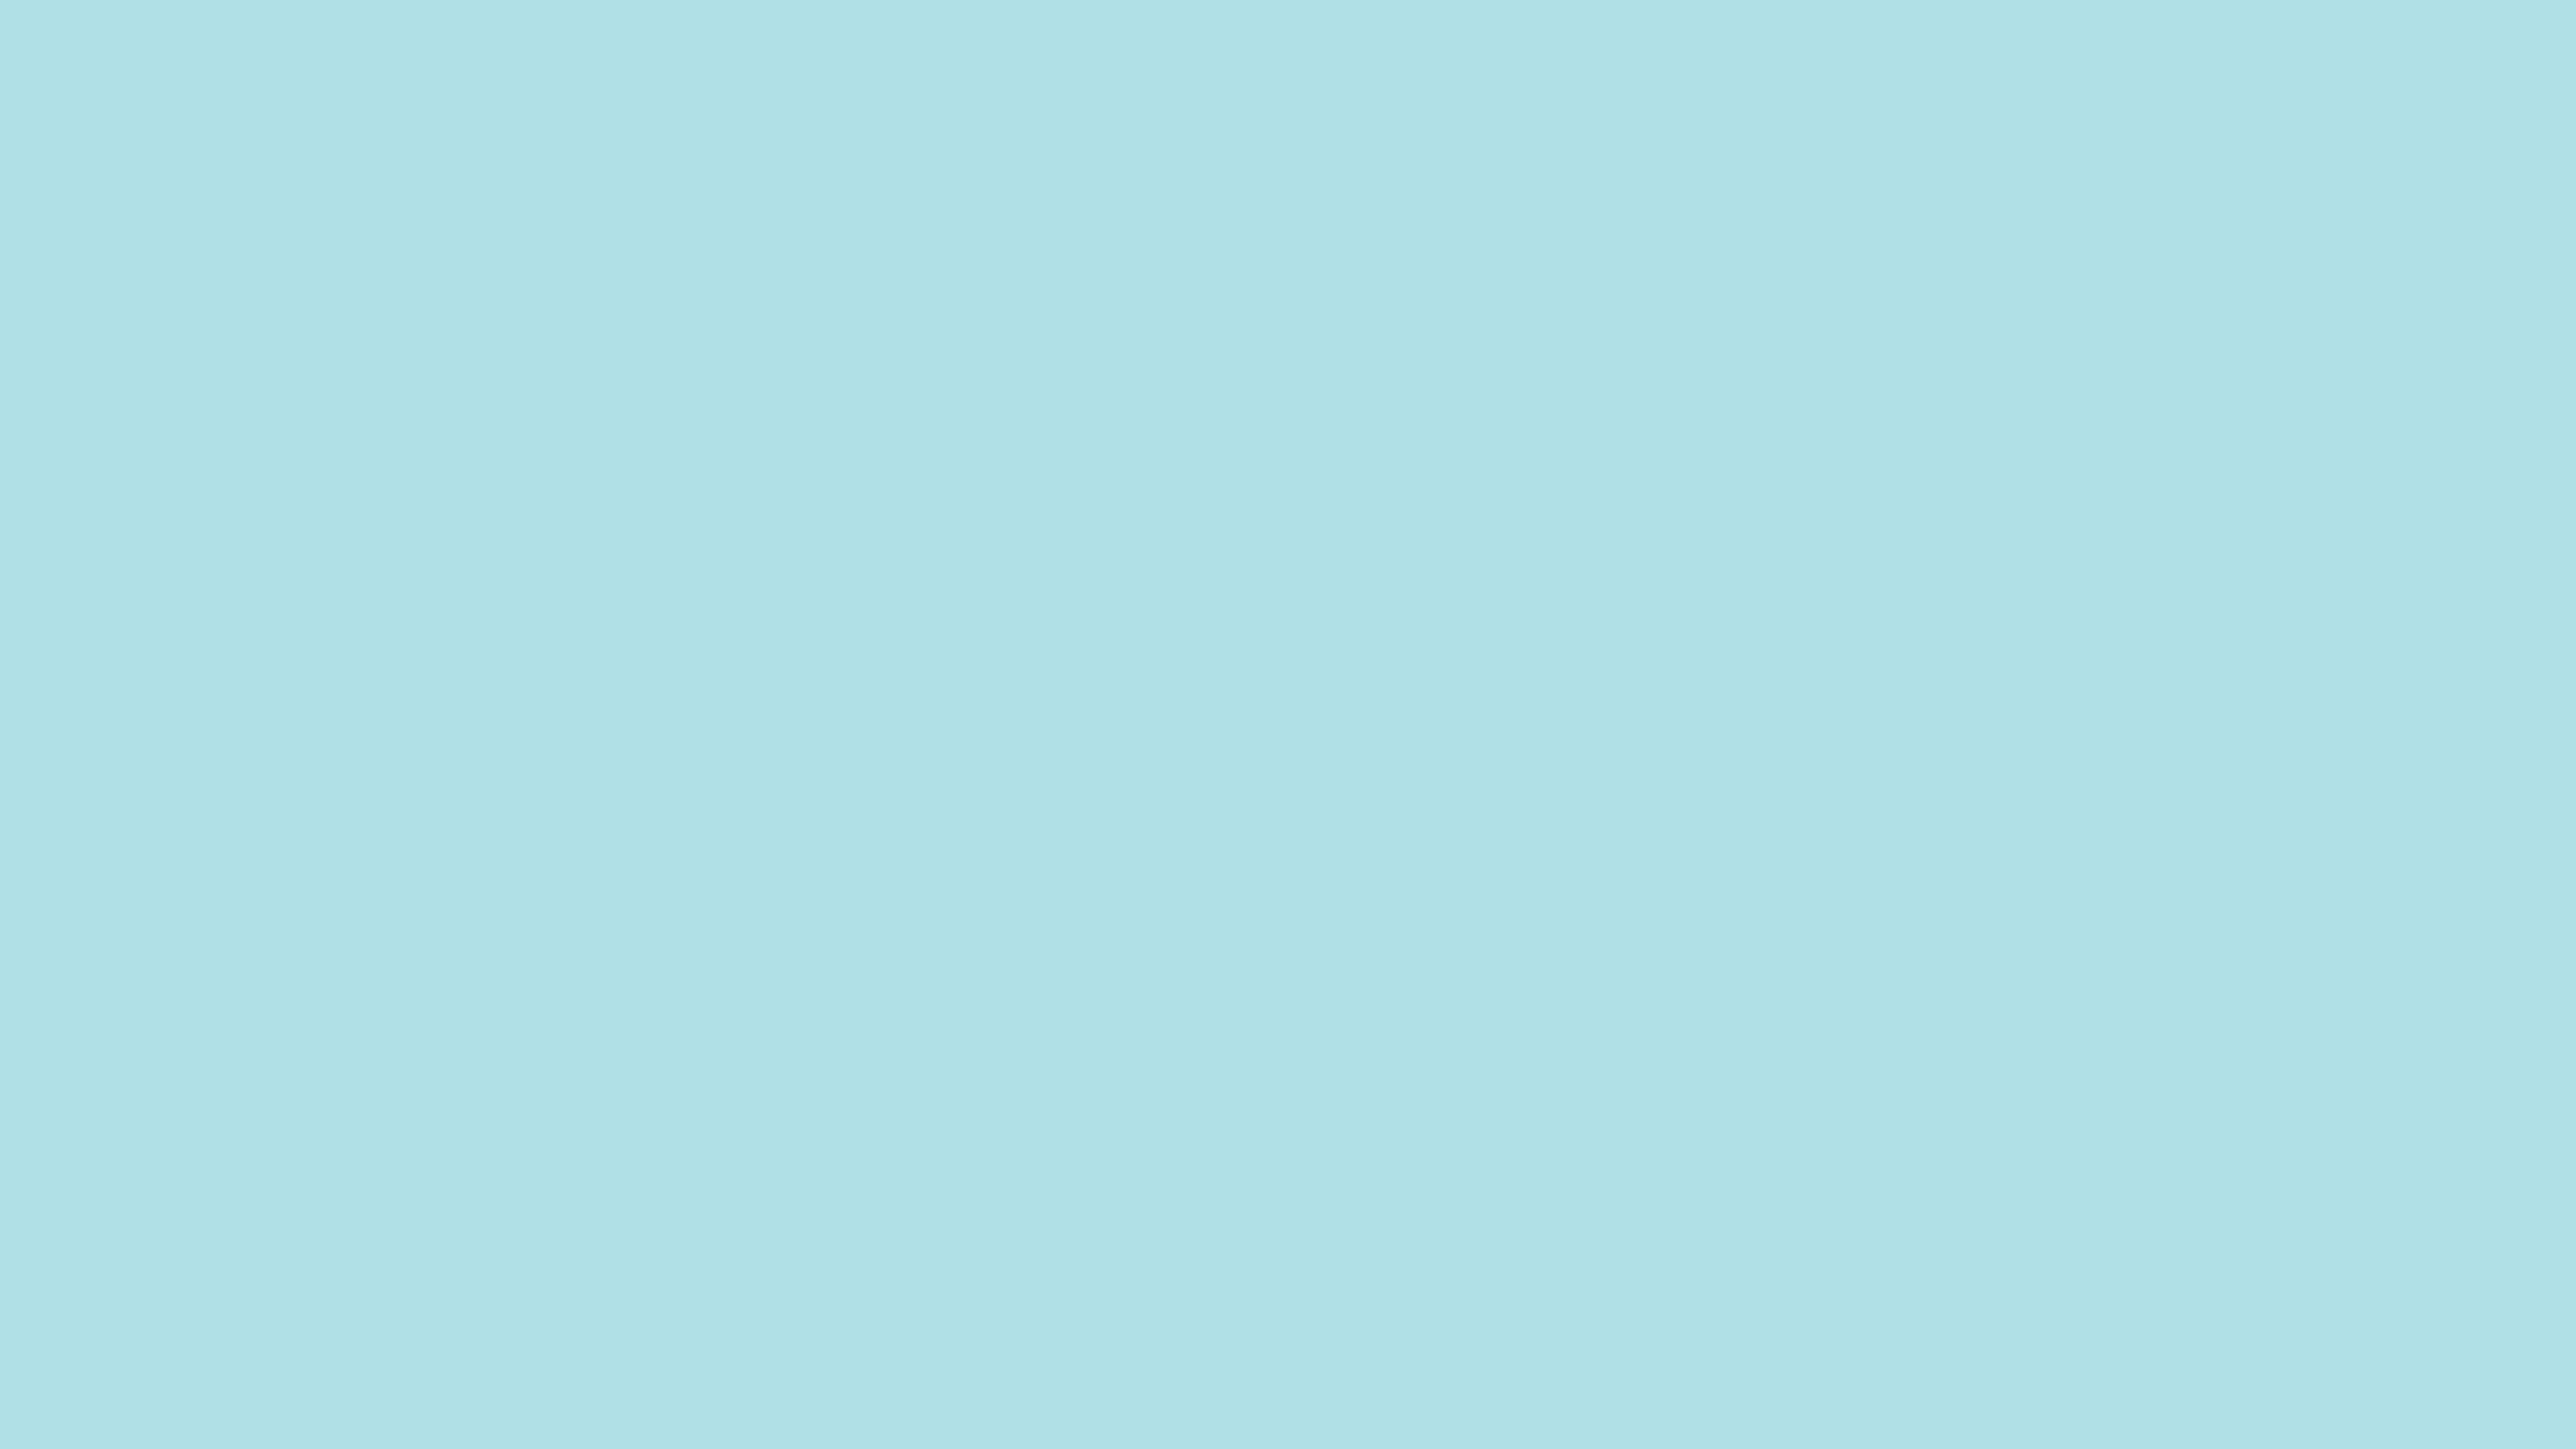 Powder Blue (Pantone) color hex code is #96B3D2